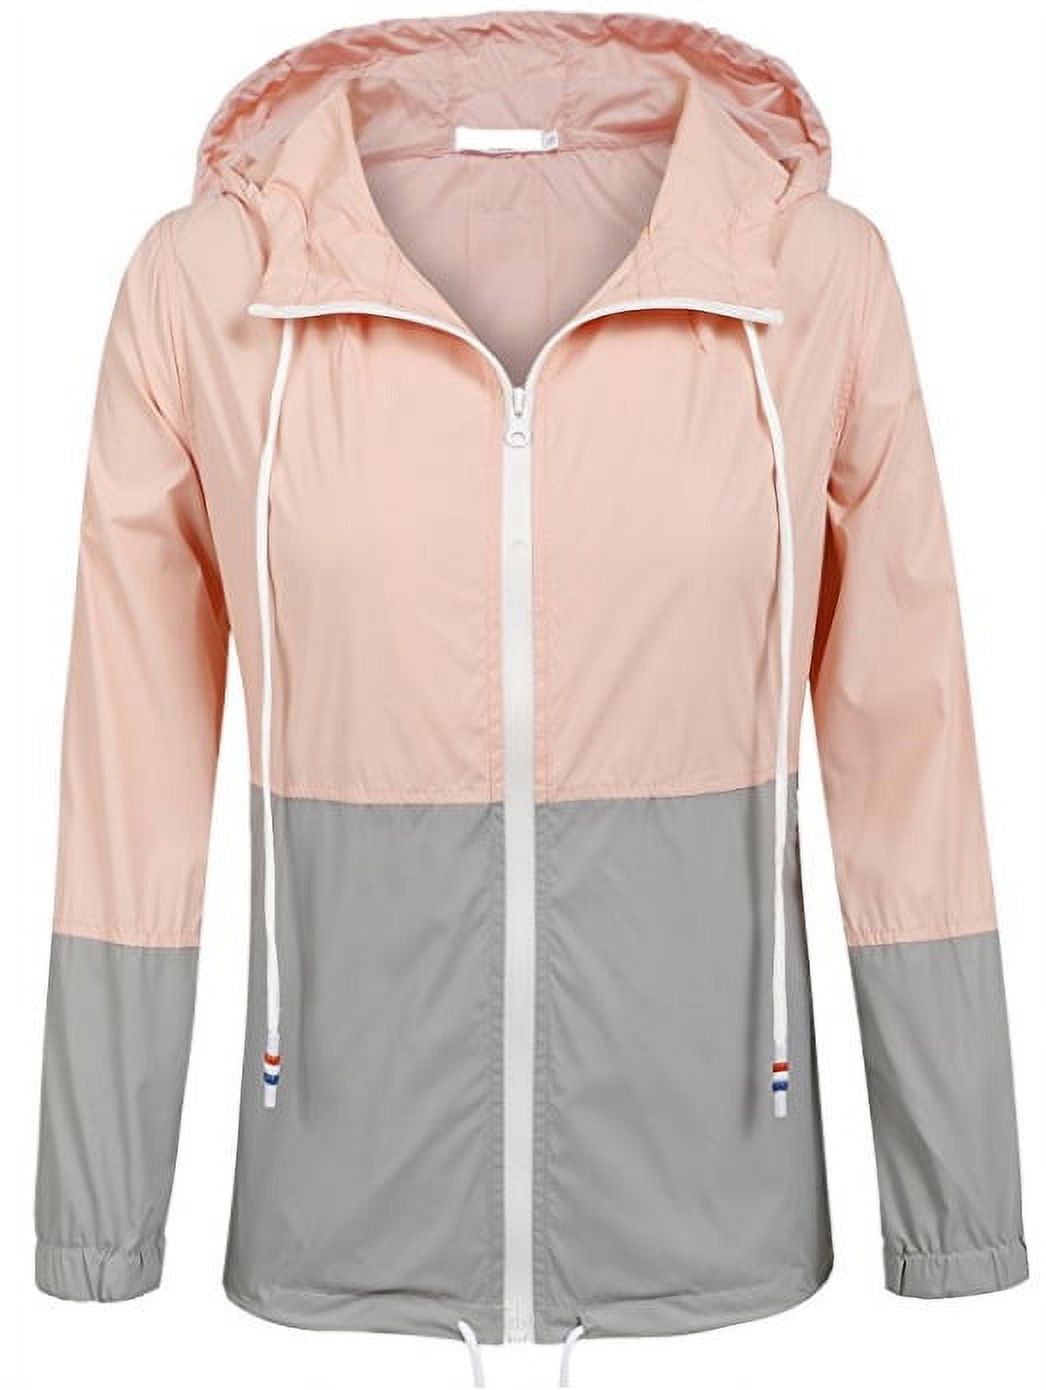 Springcmy Women´s Waterproof Raincoat Outdoor Hooded Rain Jacket Windbreaker - image 1 of 4